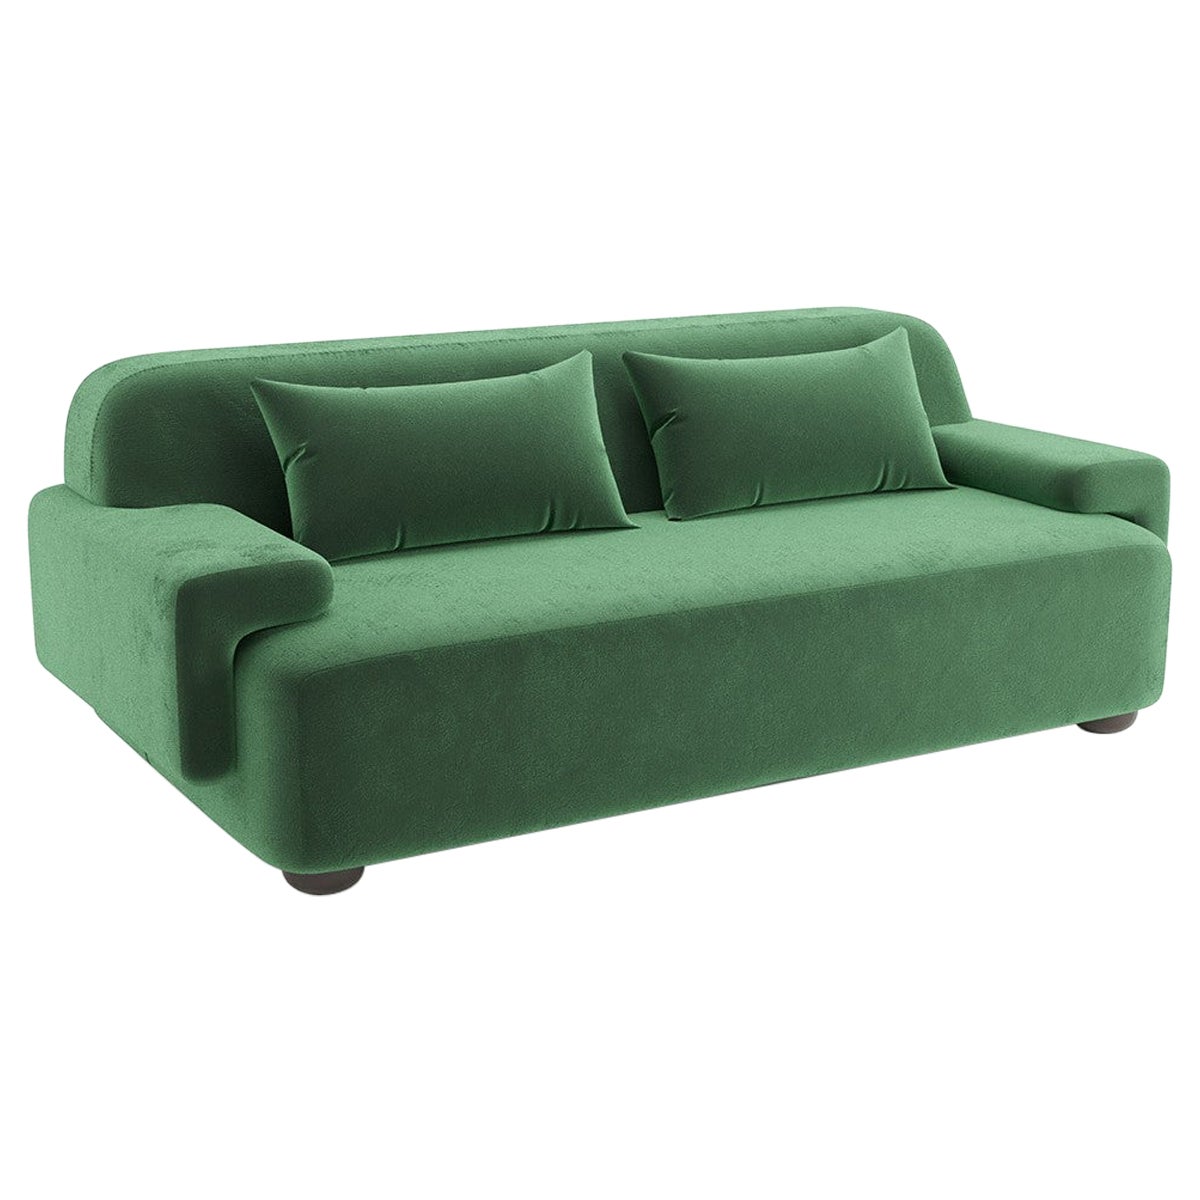 Popus Editions Lena 2.5 Seater Sofa in Green '771727' Como Velvet Upholstery